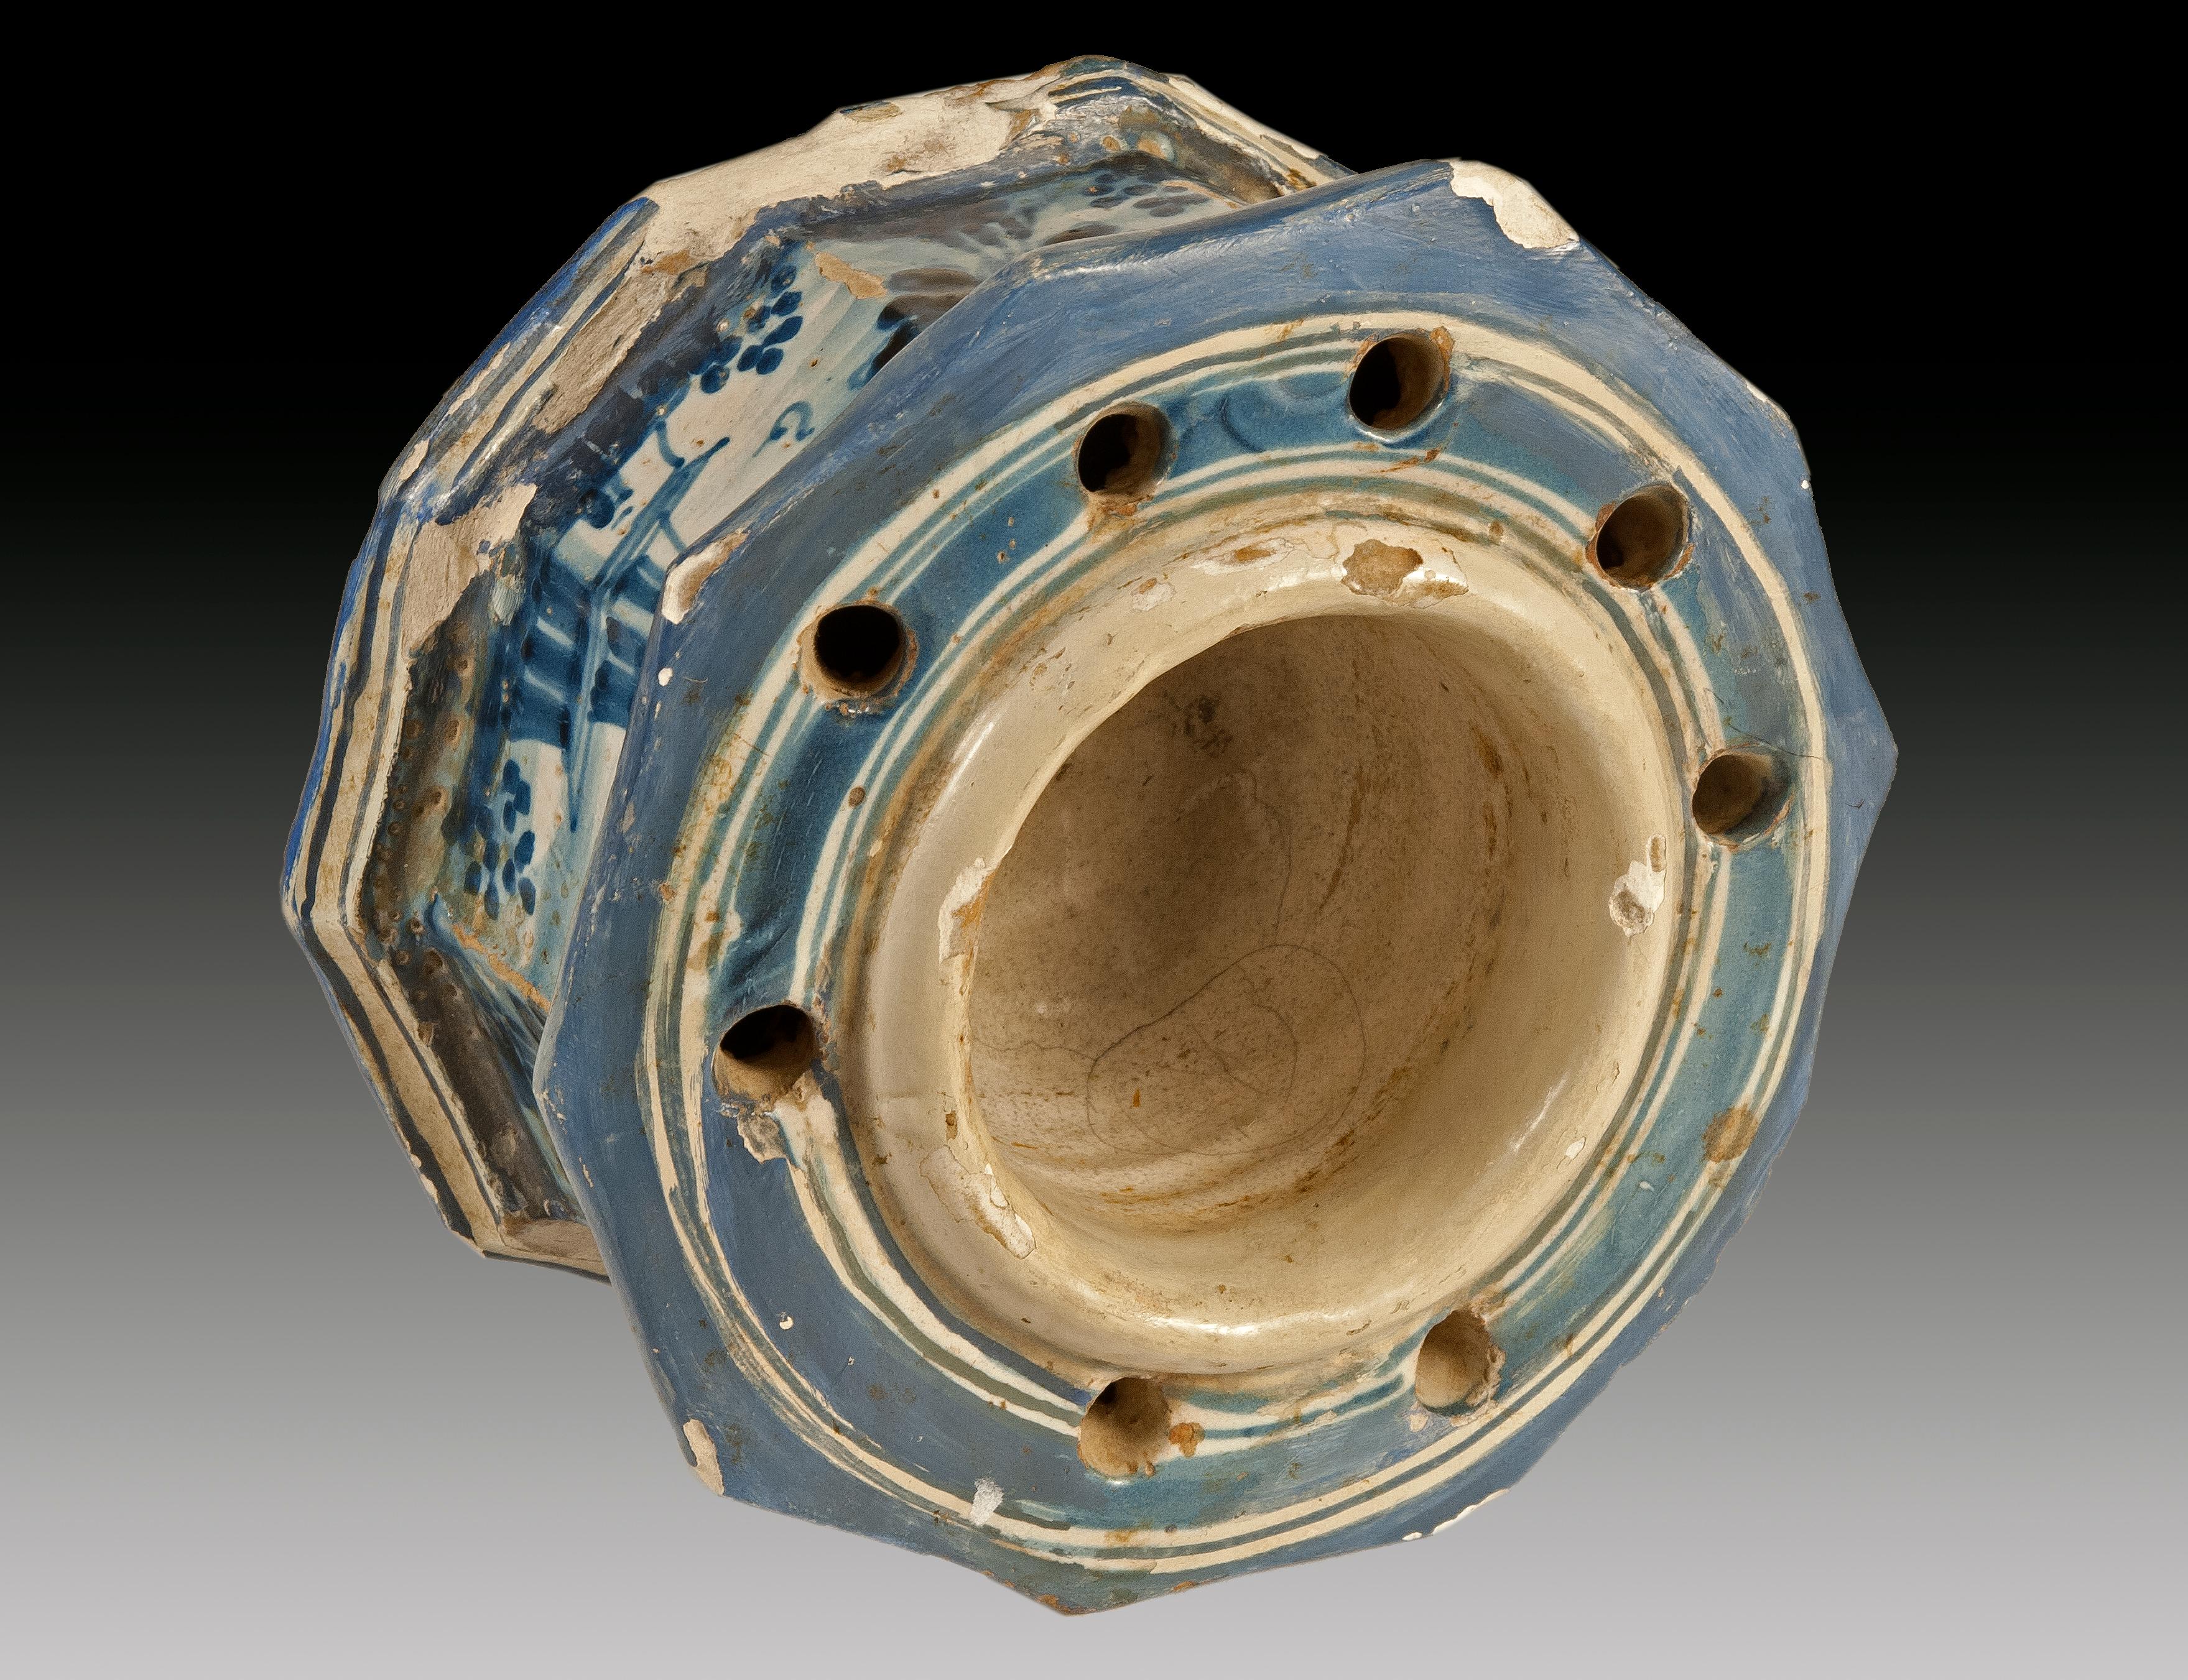 Talavera Inkwell, 18th century. Glazed pottery
Talavera ceramic inkwell, decorated with cobalt blue enamel on a white tin slip
with restorations